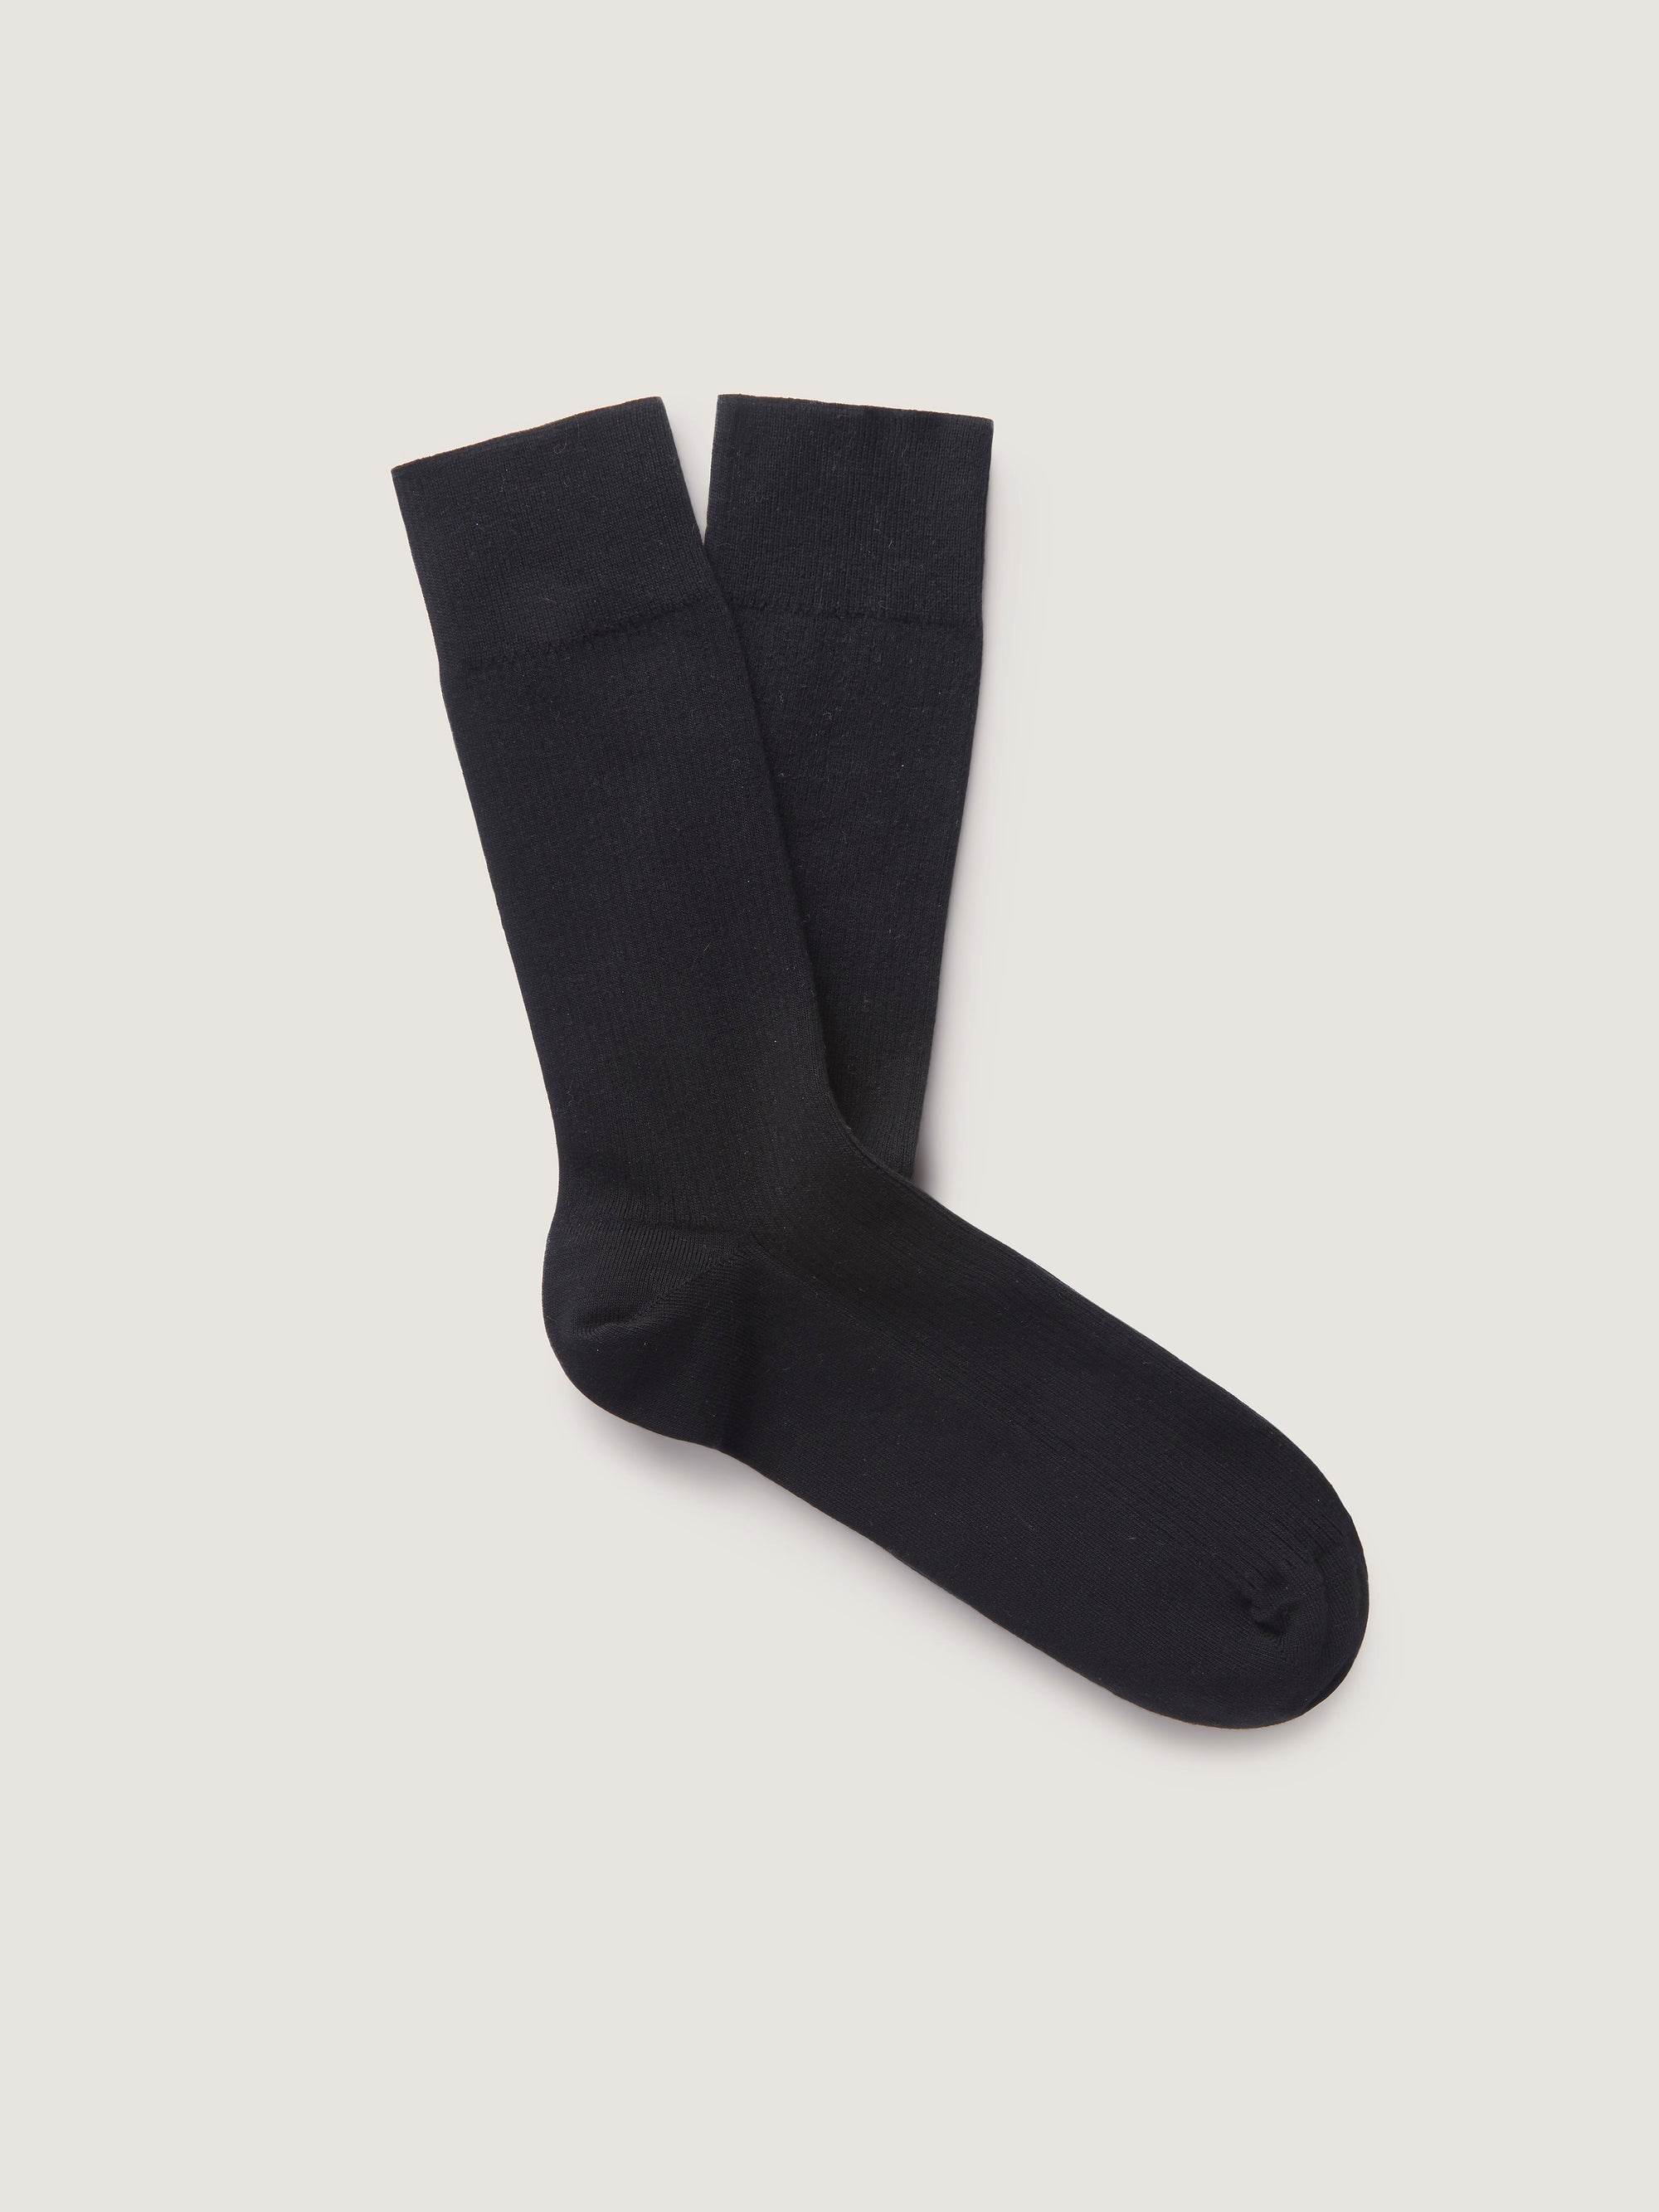 The Line Sock || Black | Organic Cotton